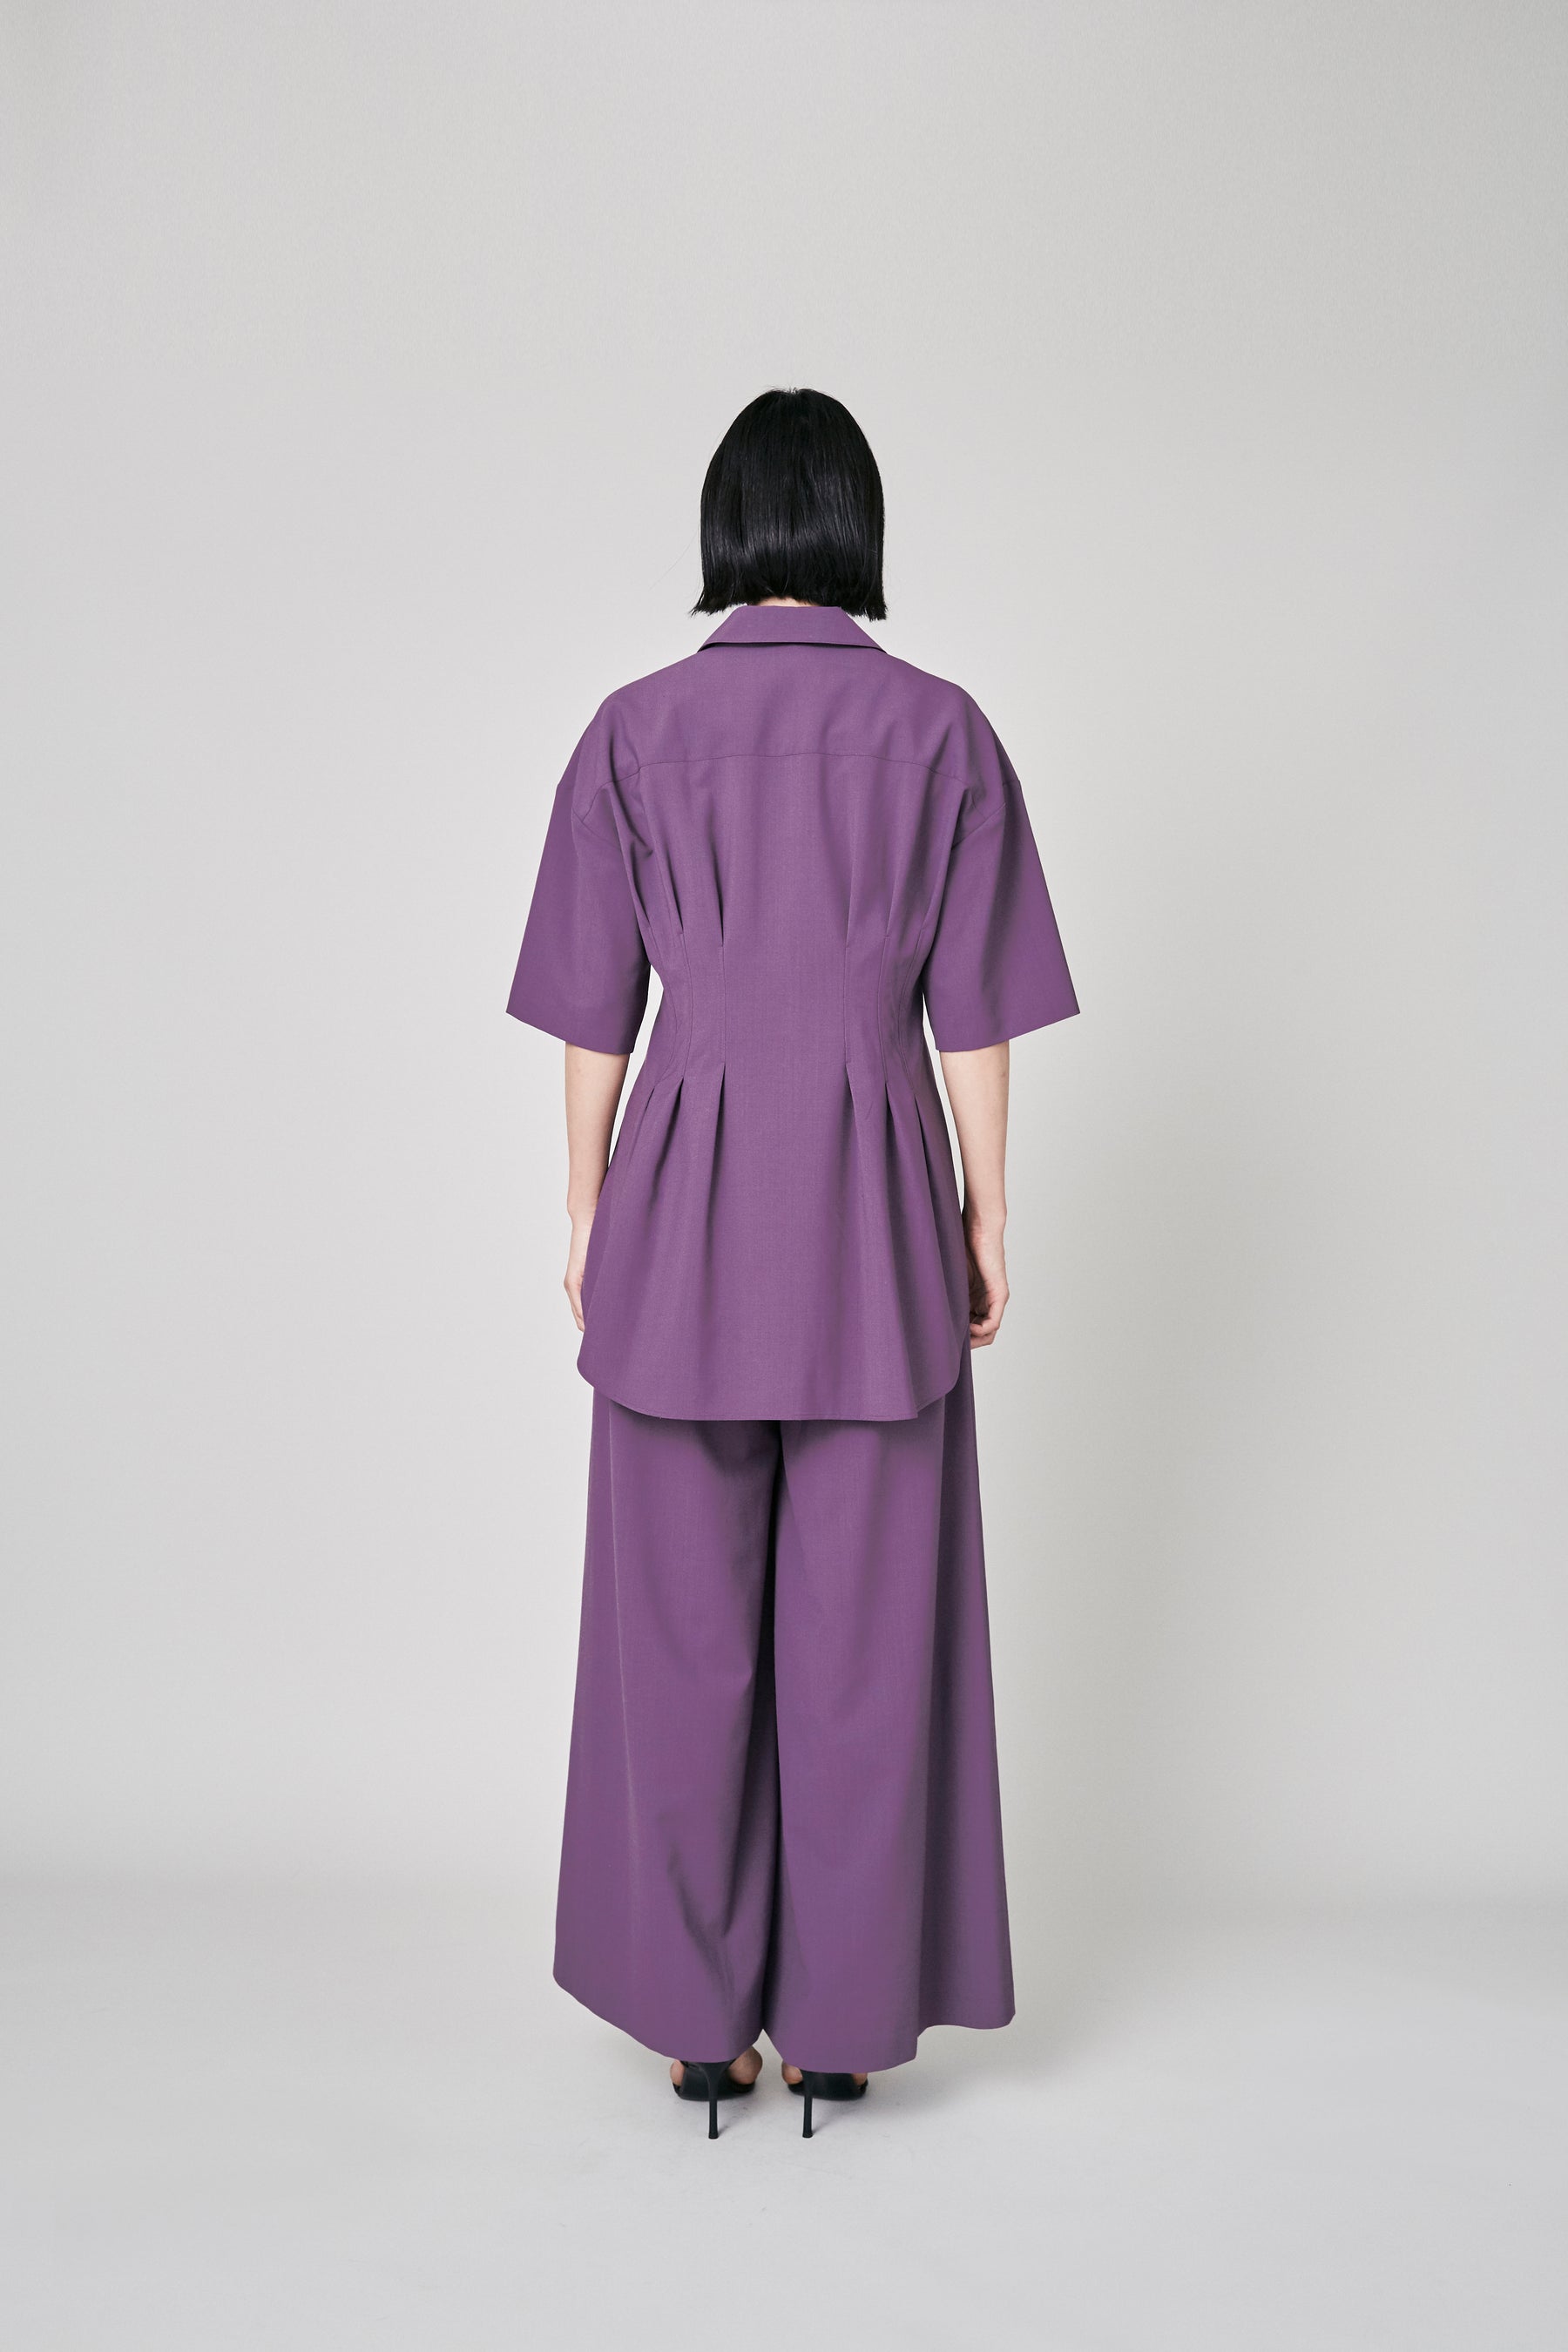 Contrast wide slacks (Purple)